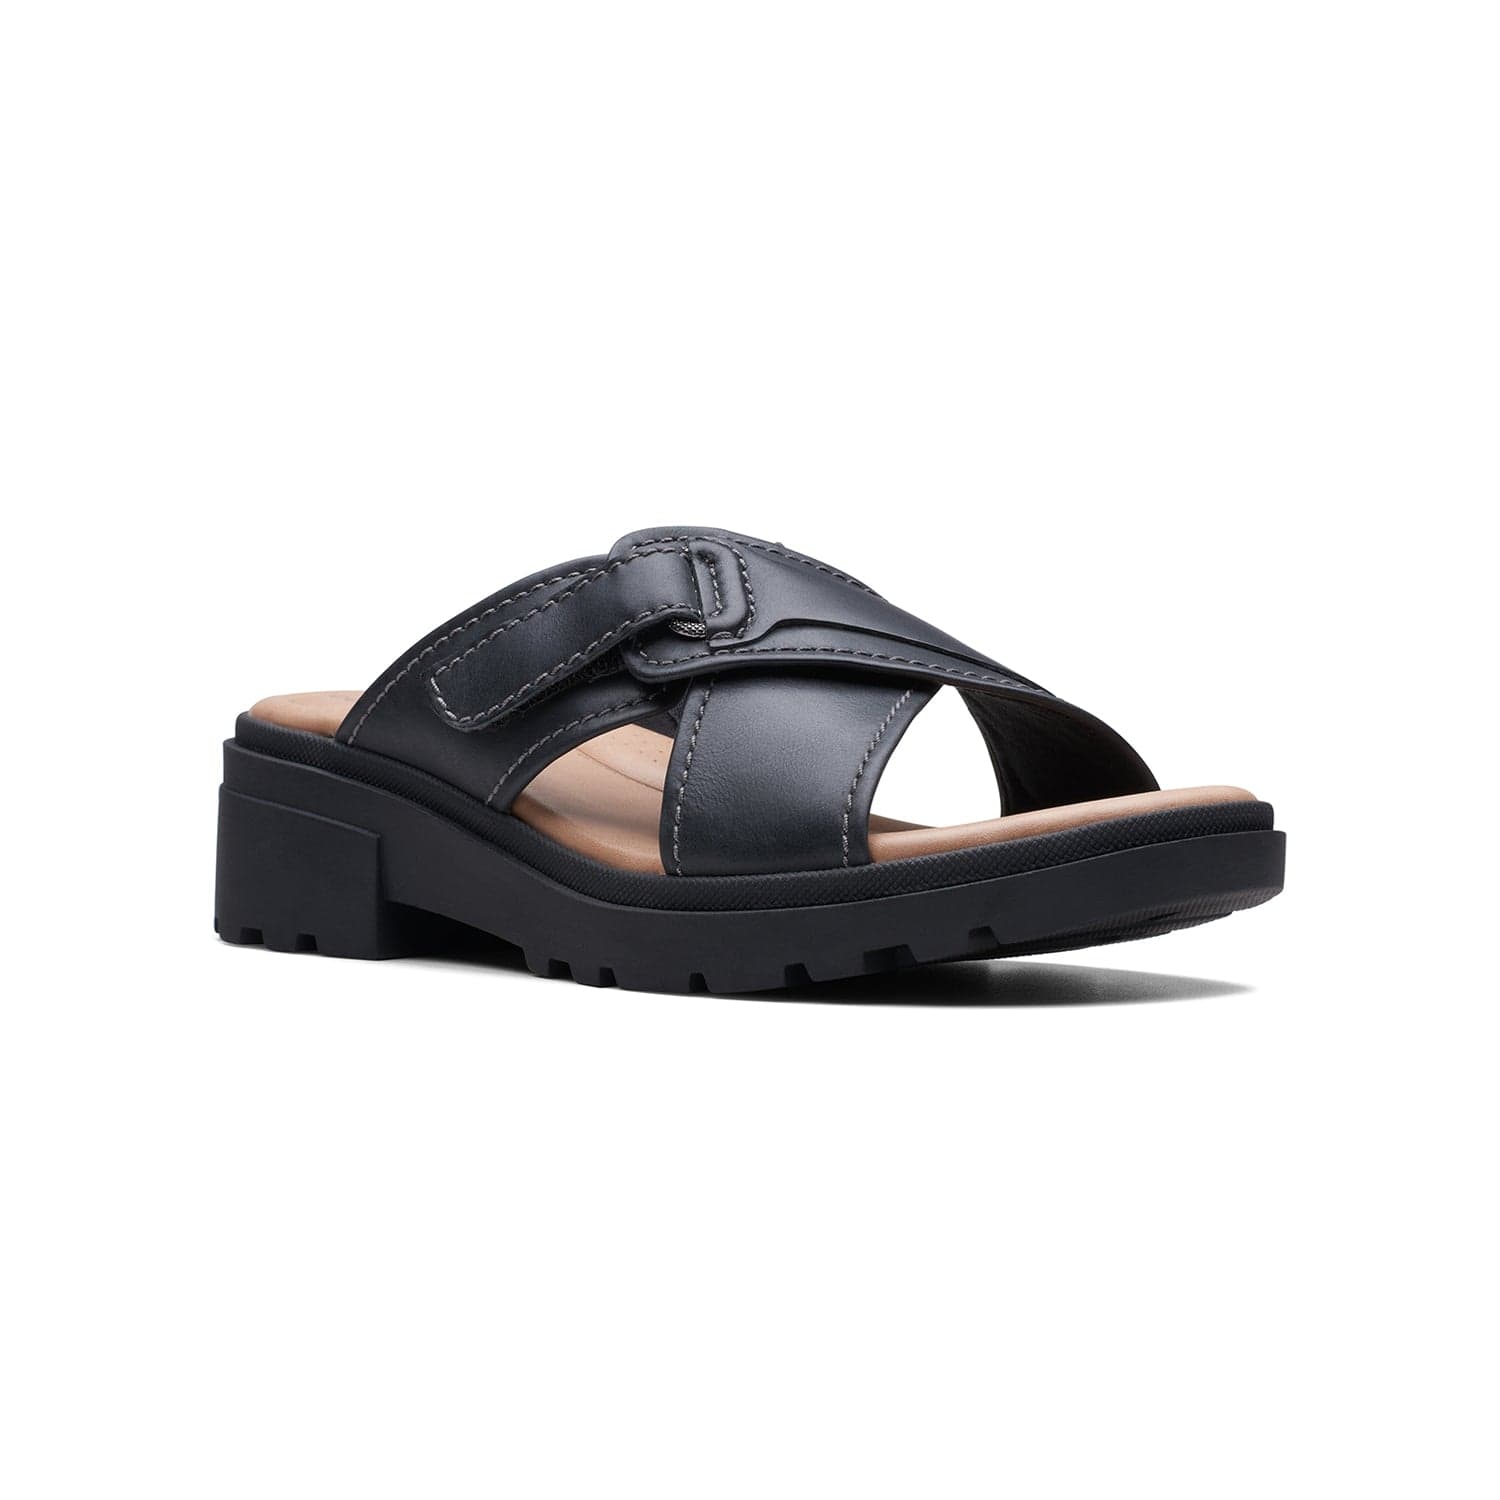 Clarks Coast Cross - Sandals - Black Leather - 261717325 - E Width (Wide Fit)